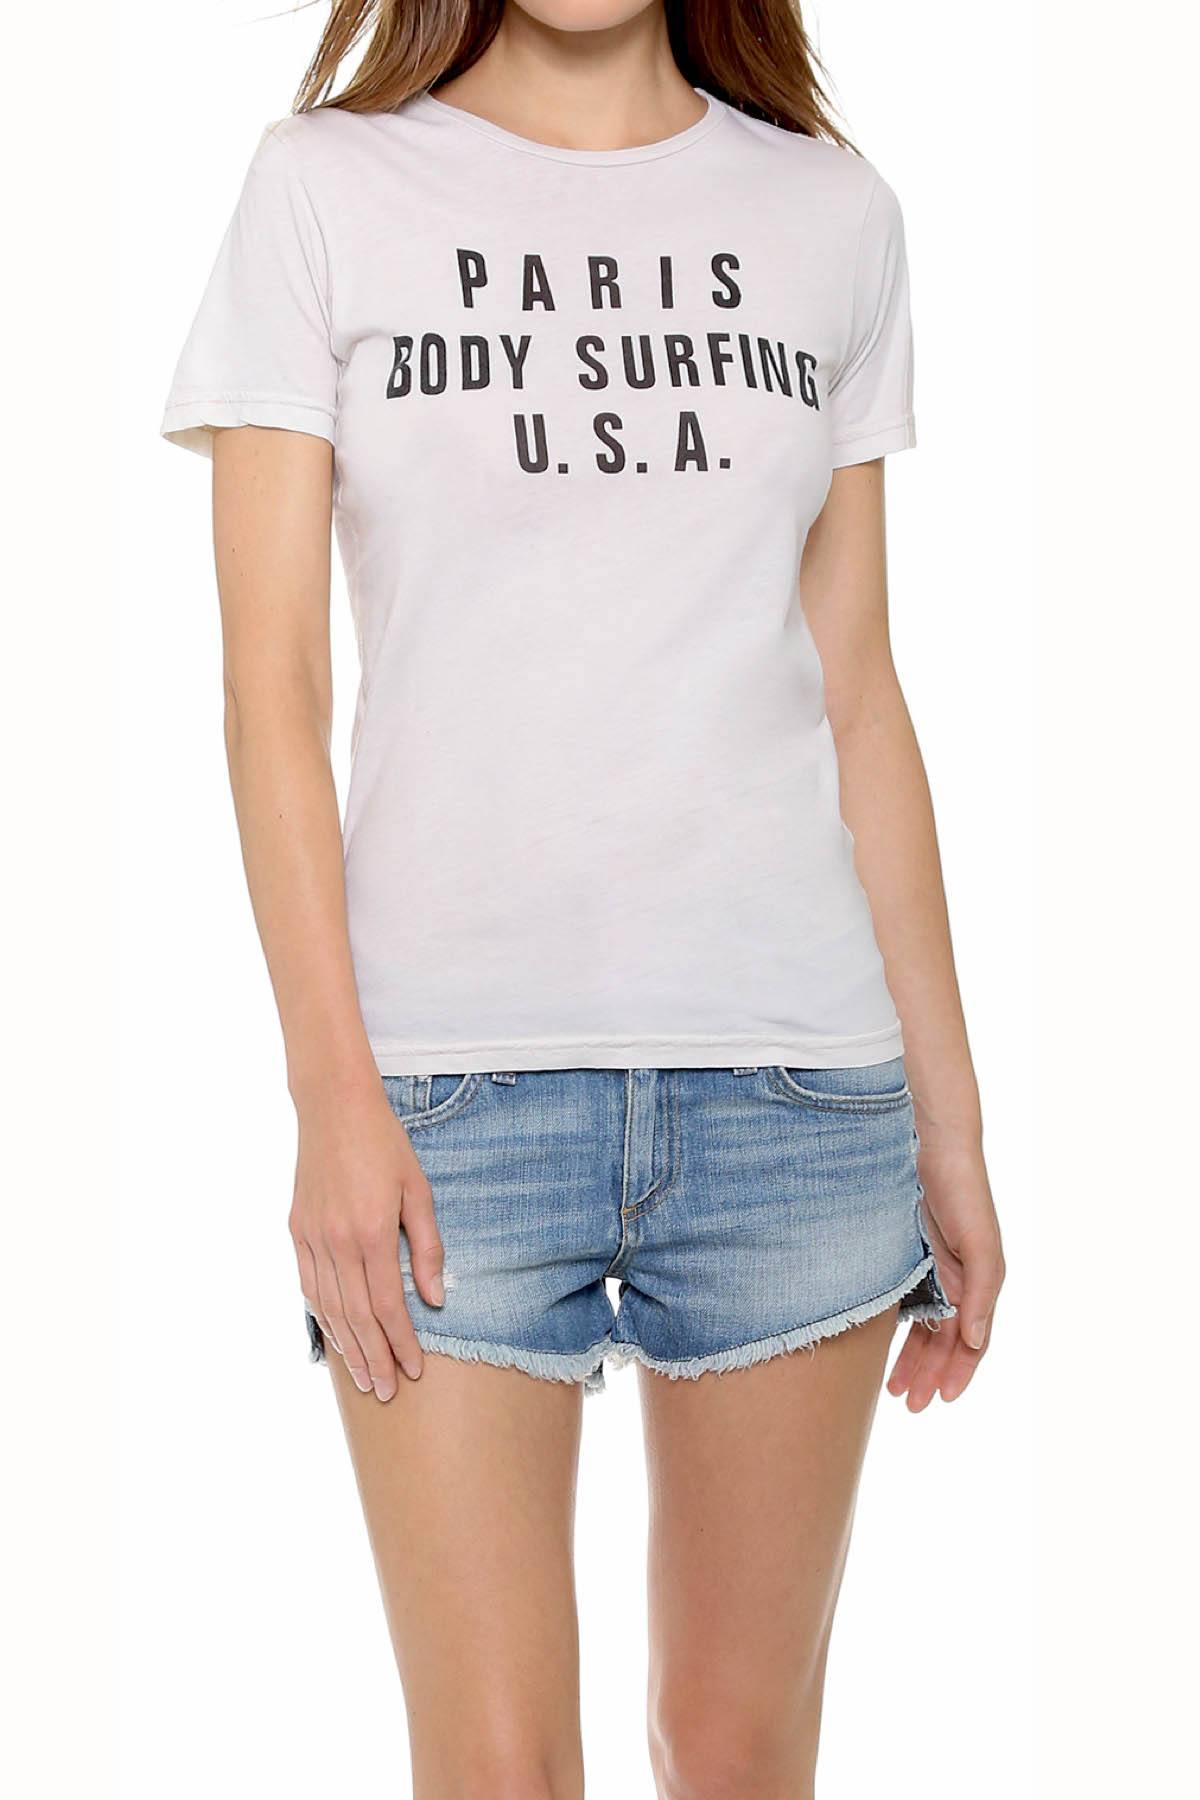 Rxmance Unisex White Sand 'Body Surfing' Tee